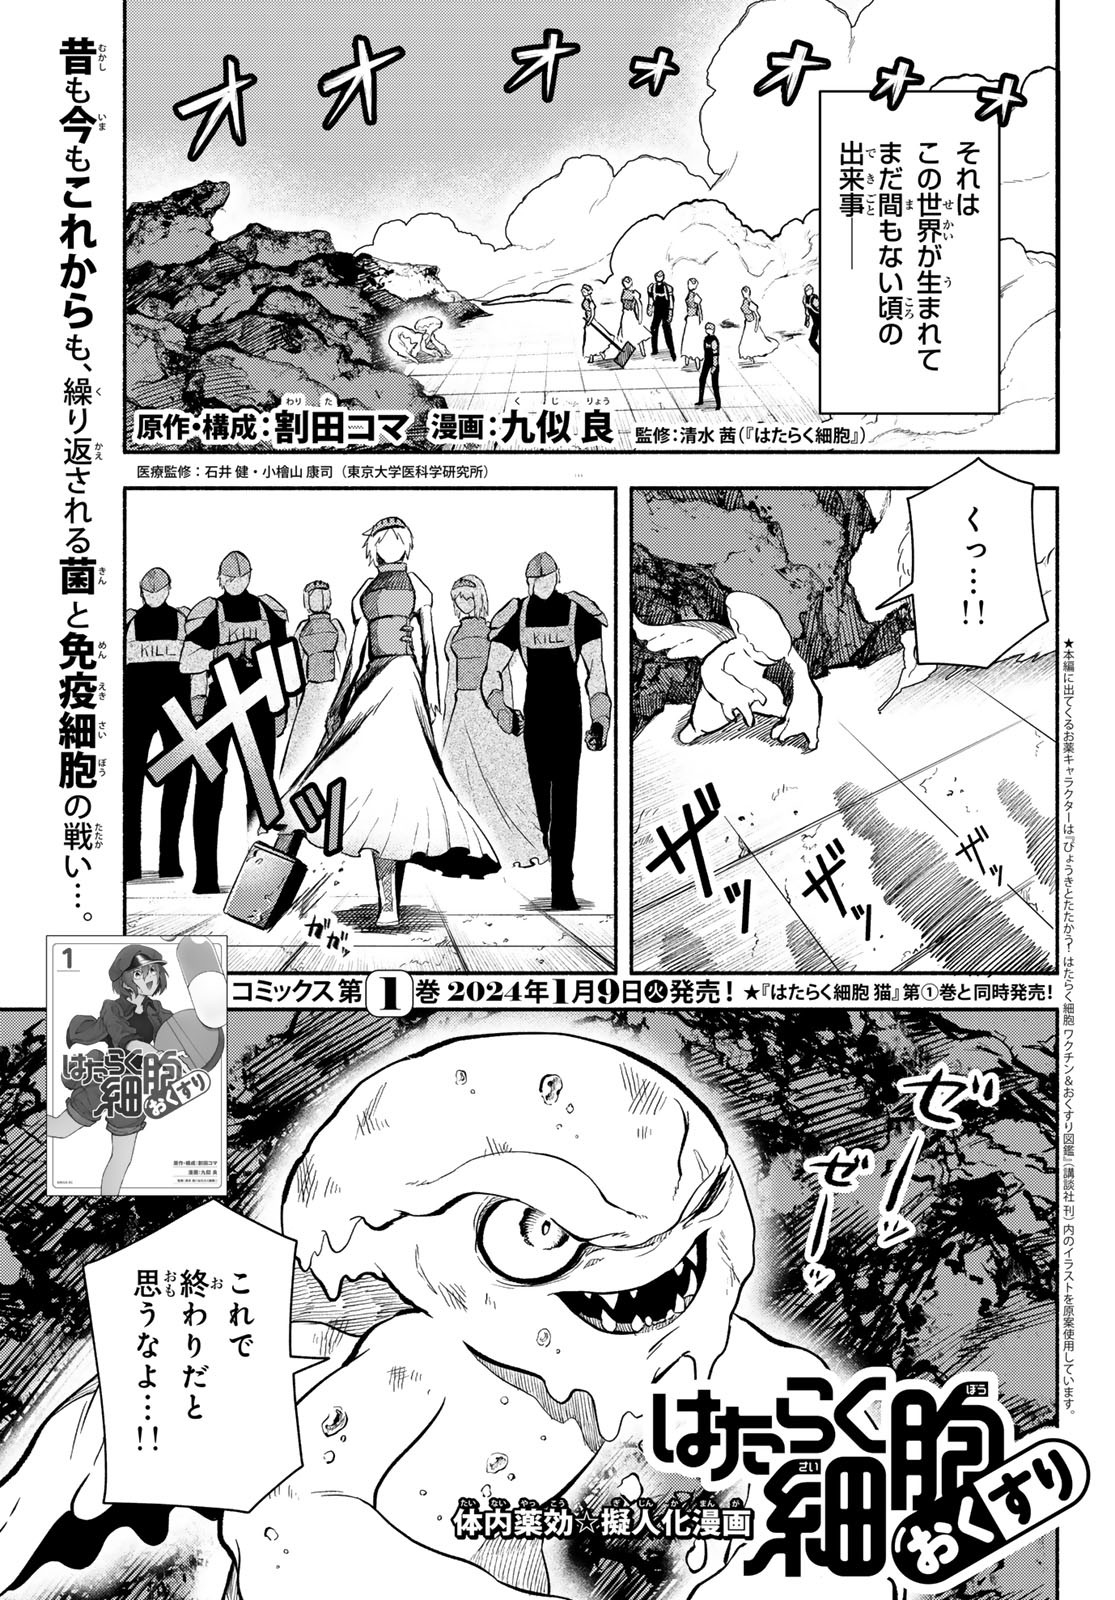 Hataraku Saibou Okusuri - Chapter 7.1 - Page 1